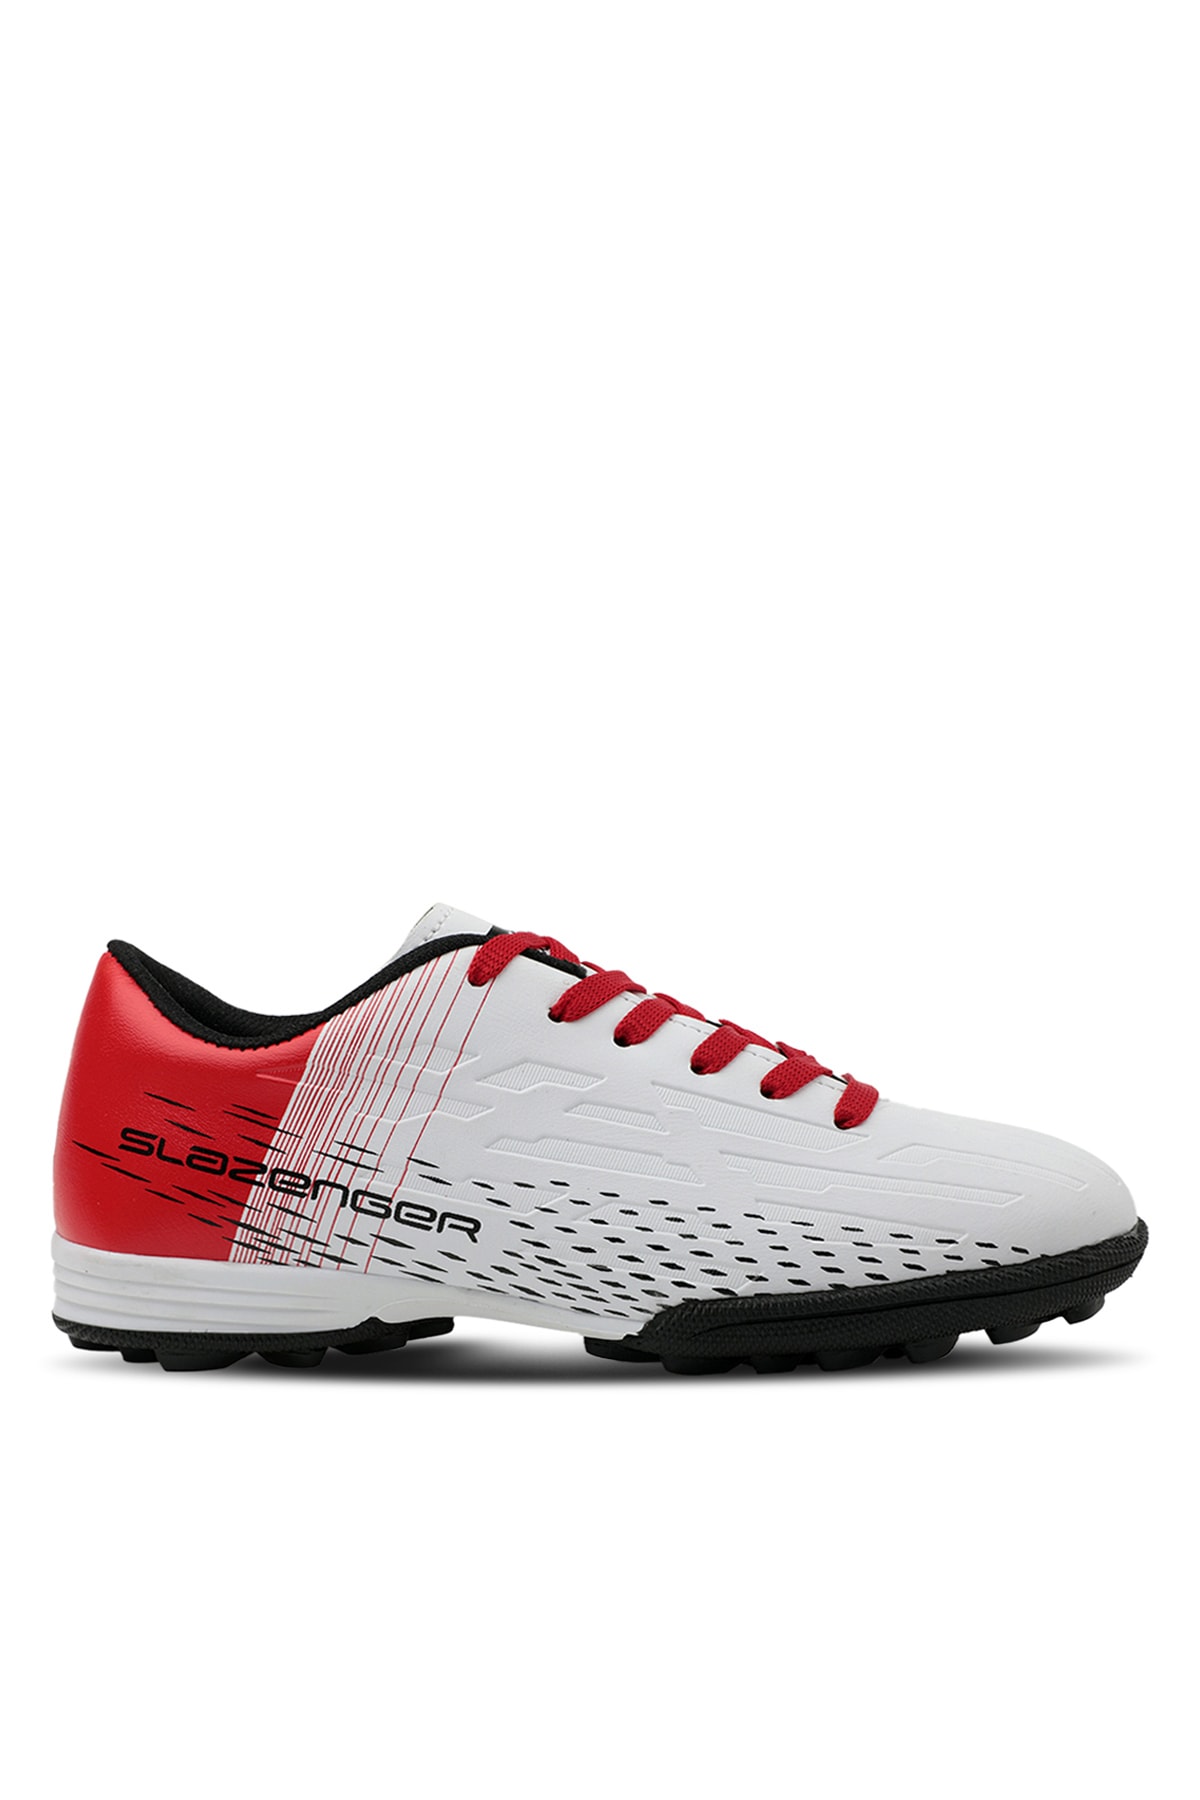 Slazenger Score Hs Ποδόσφαιρο Ανδρικά Παπούτσια Χλοοτάπητα Λευκό / Κόκκινο